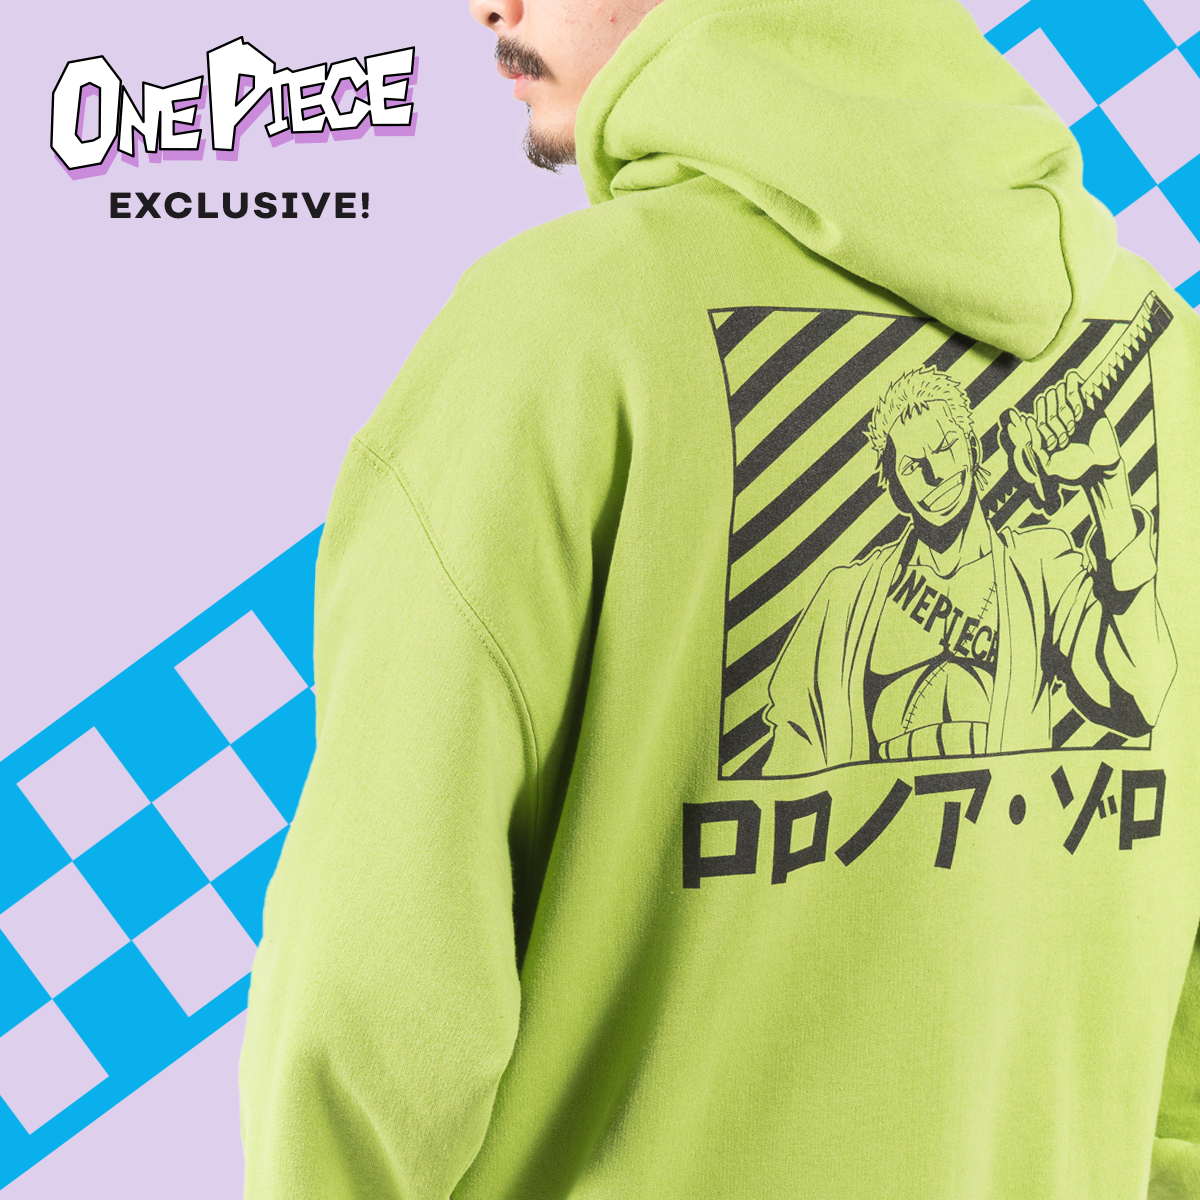 One Piece - Zoro Hoodie - Crunchyroll Exclusive! image count 0